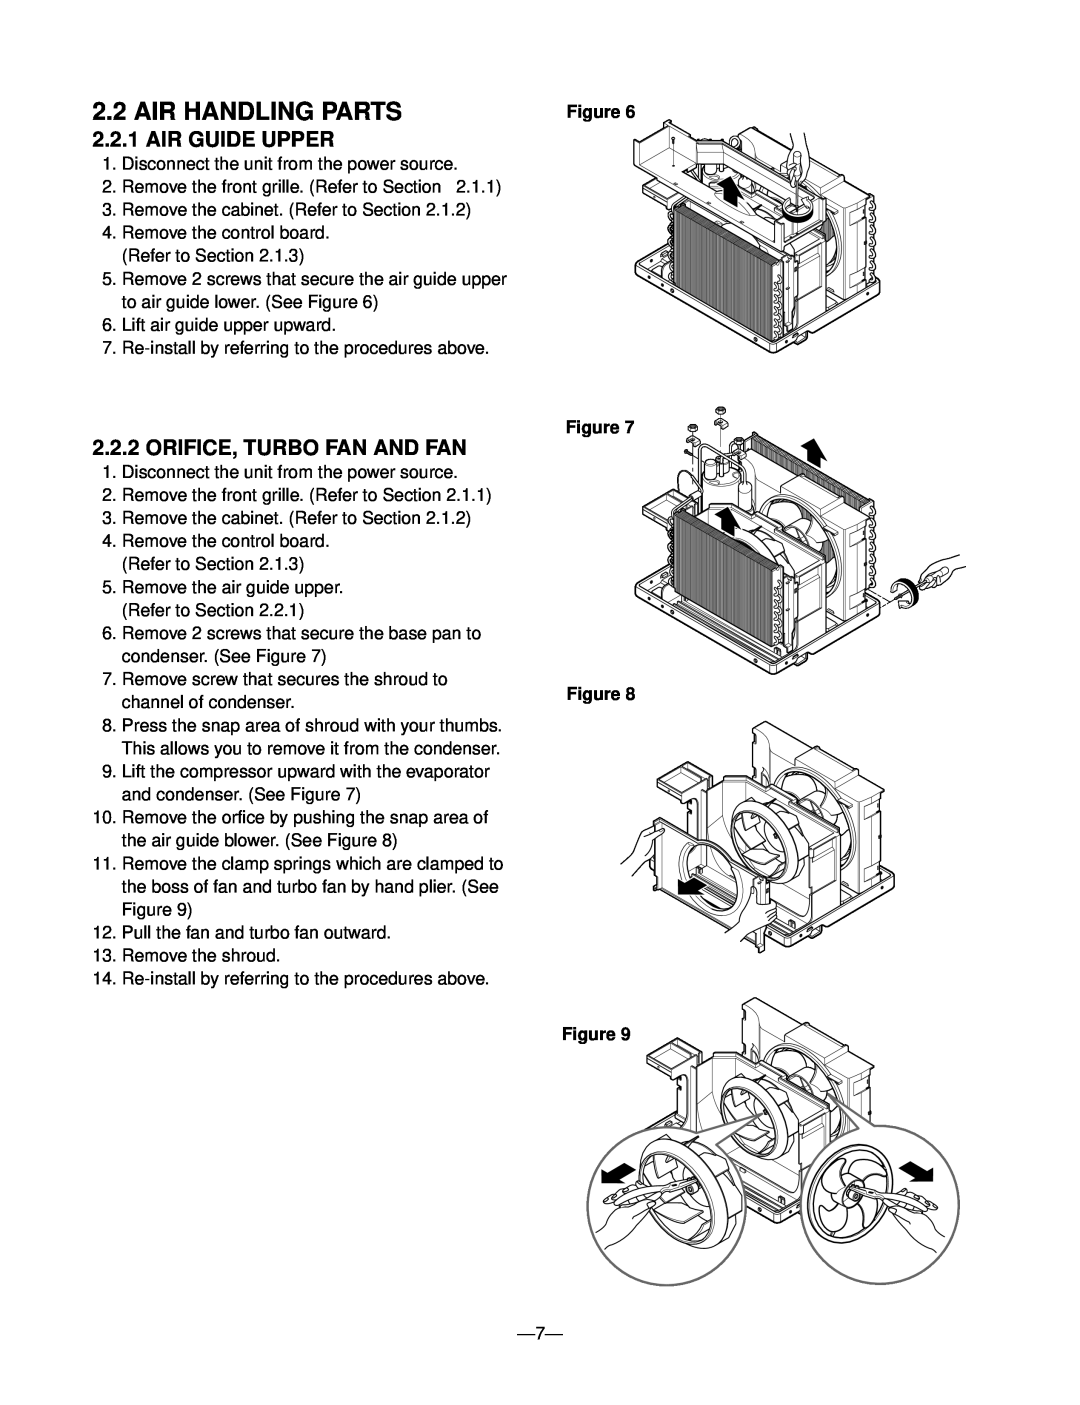 Goldstar WM-6011, M6003R Air Handling Parts, Air Guide Upper, Orifice, Turbo Fan And Fan, Figure Figure Figure Figure 